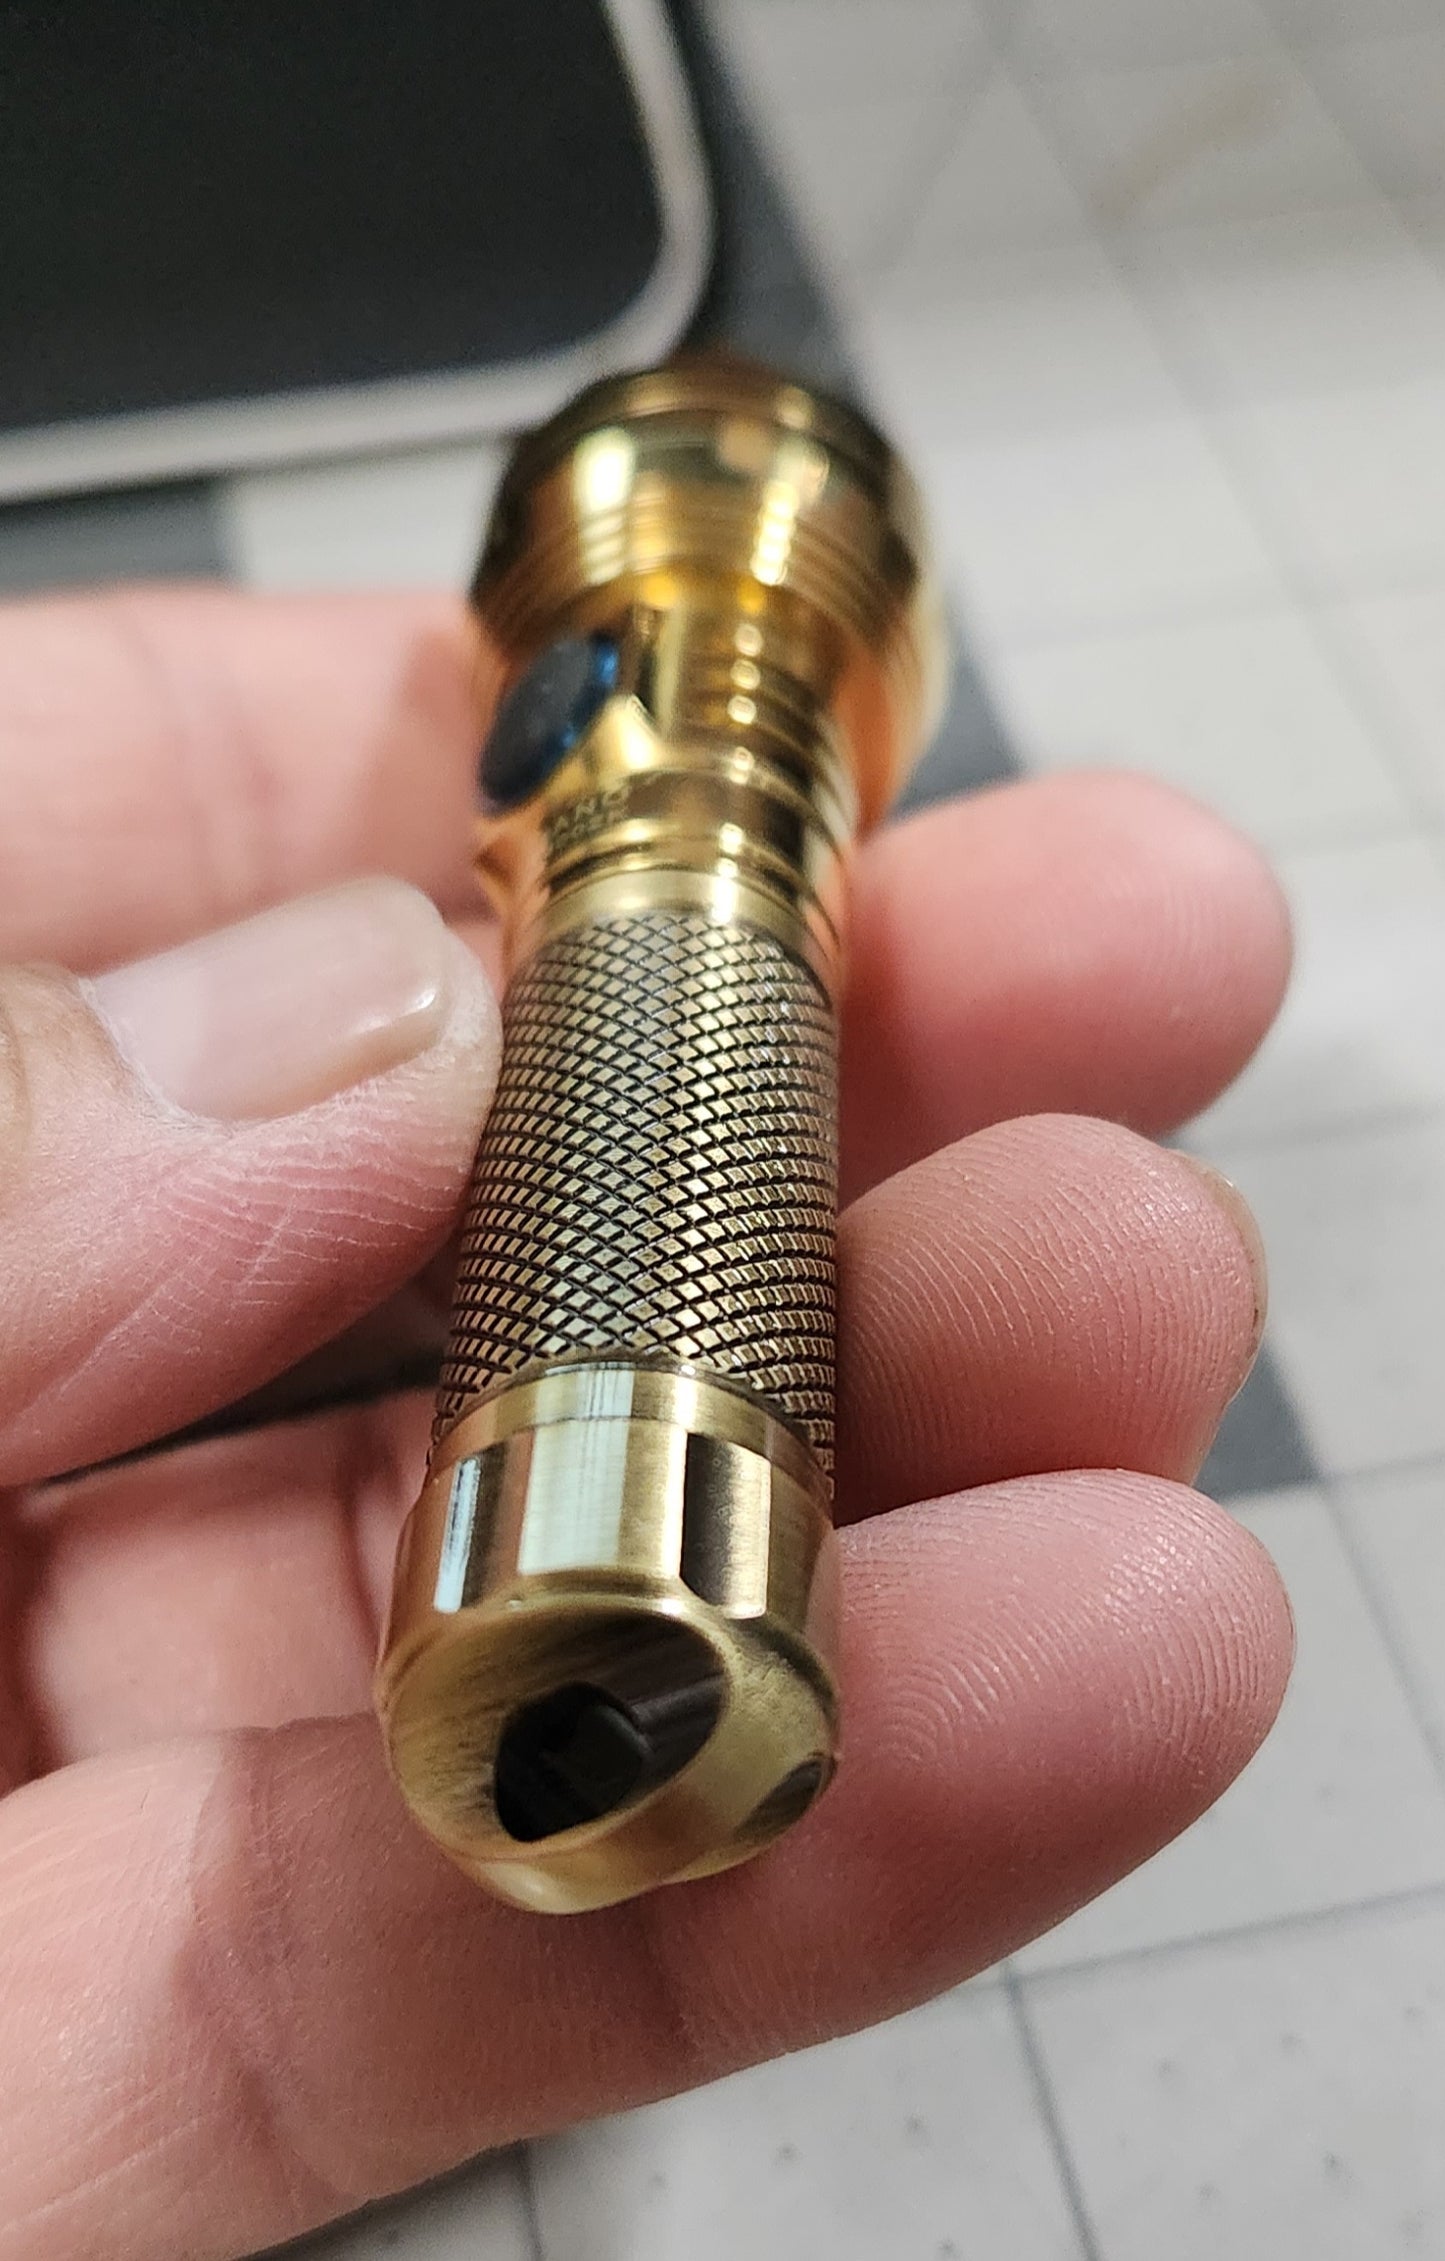 Lumintop GT Nano Copper OR Brass 450 Lumens EDC Keychain LED Flashlight